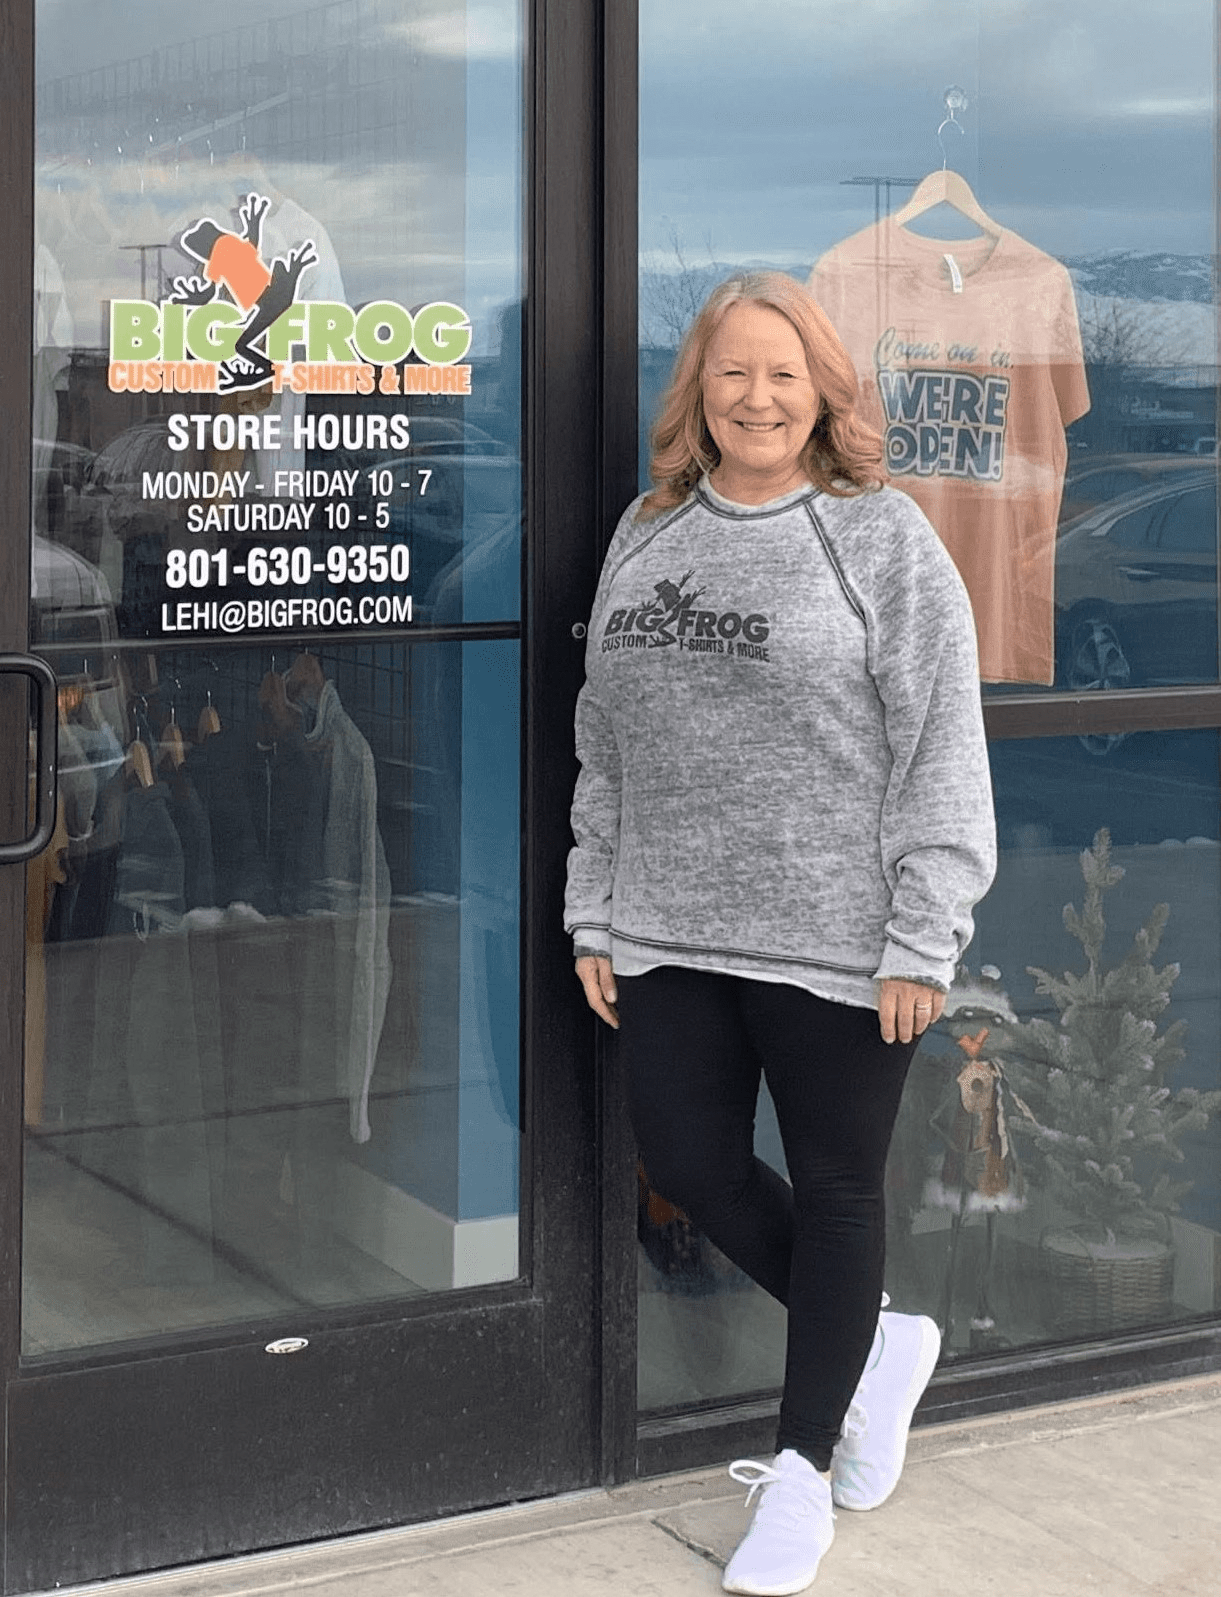 Big Frog Custom T-shirts & More of Salt Lake City/Lehi Owner Nancy Provolt